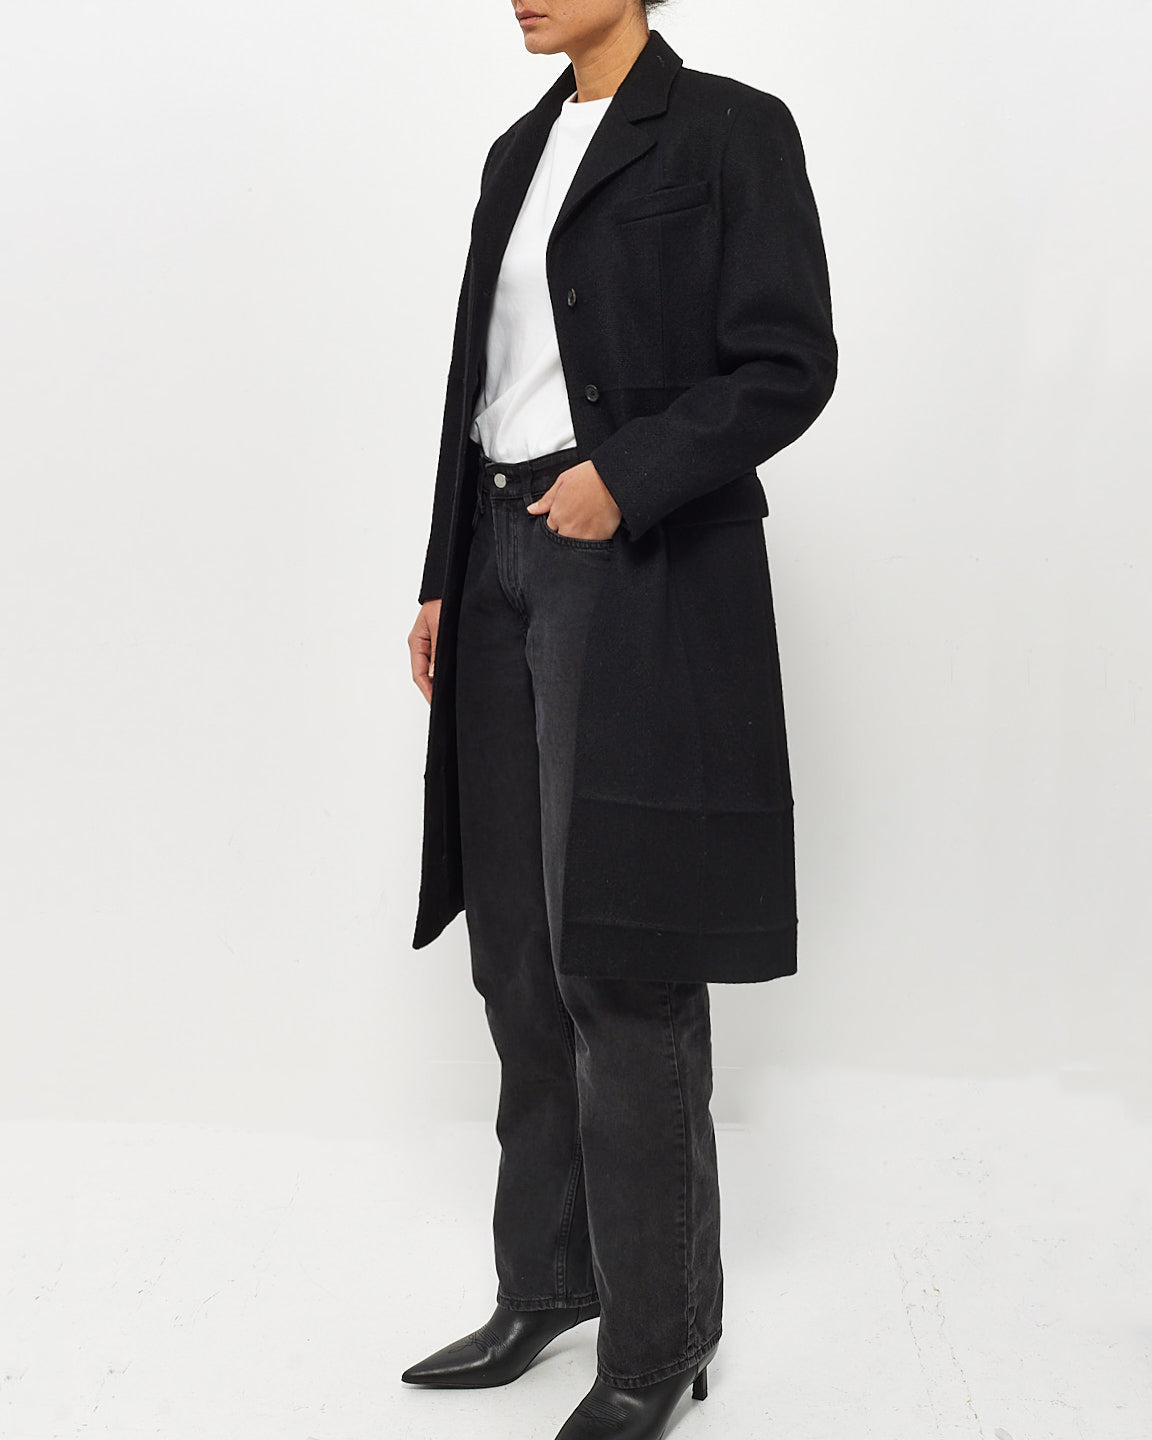 Prada Black Fleece Wool Long Coat - 42 (US 6)